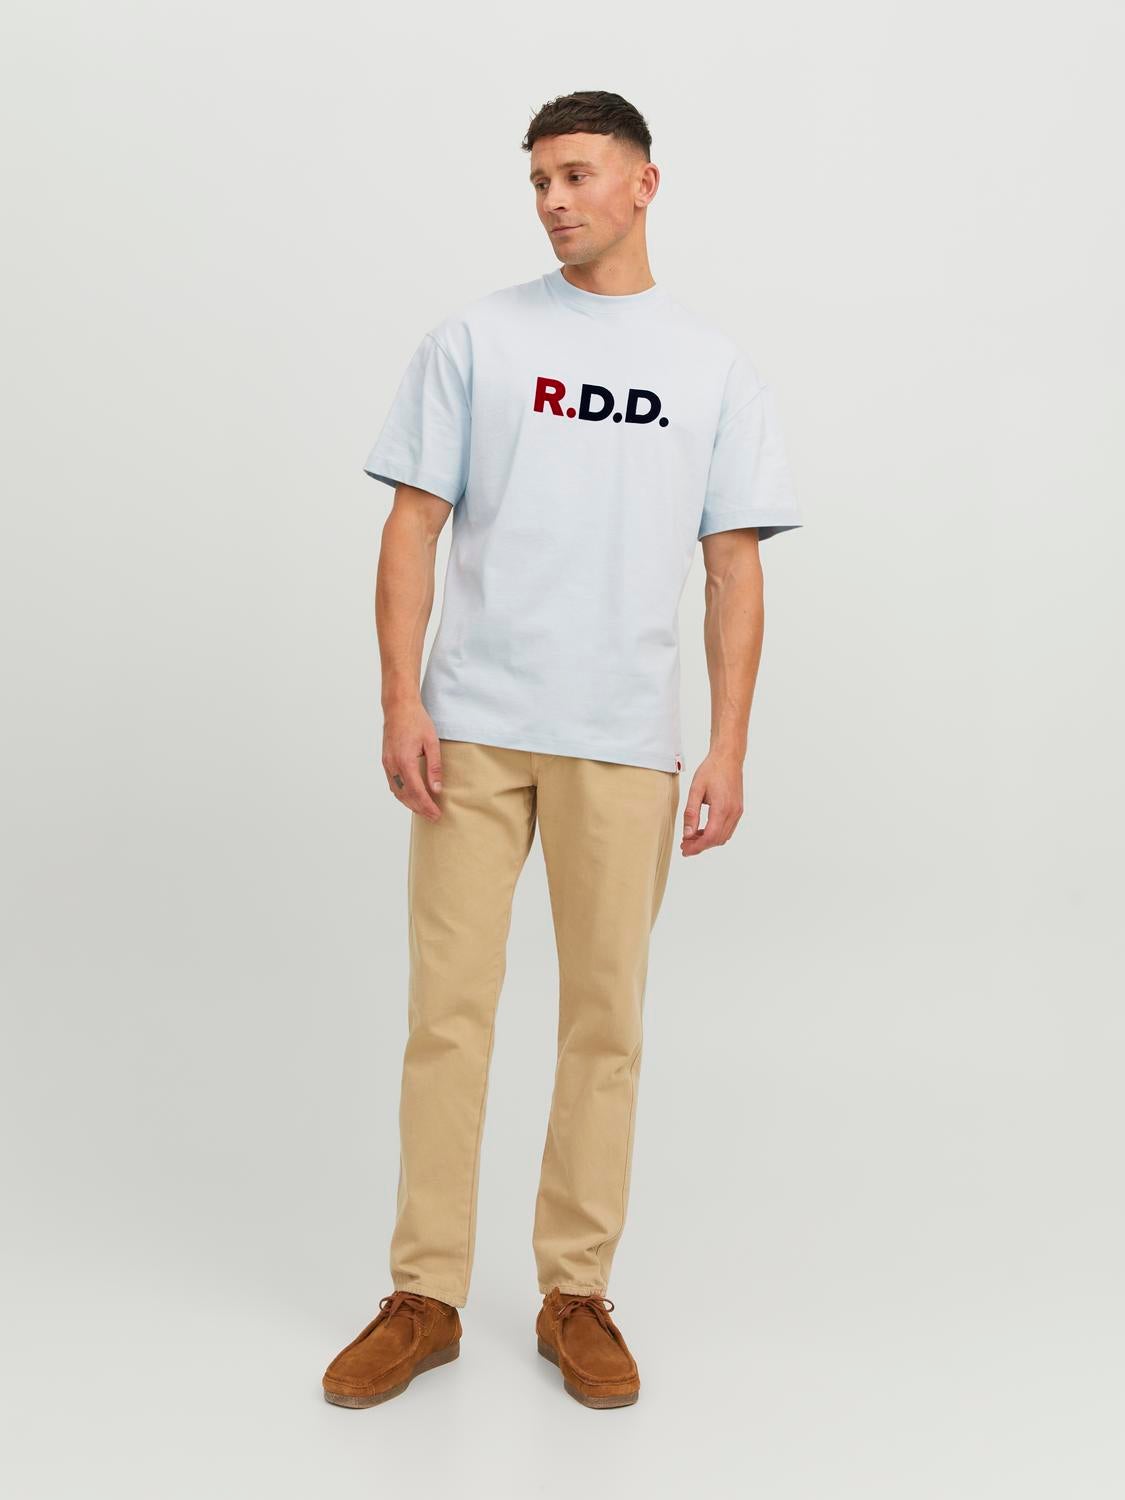 RDD T-shirt Logo Decote Redondo